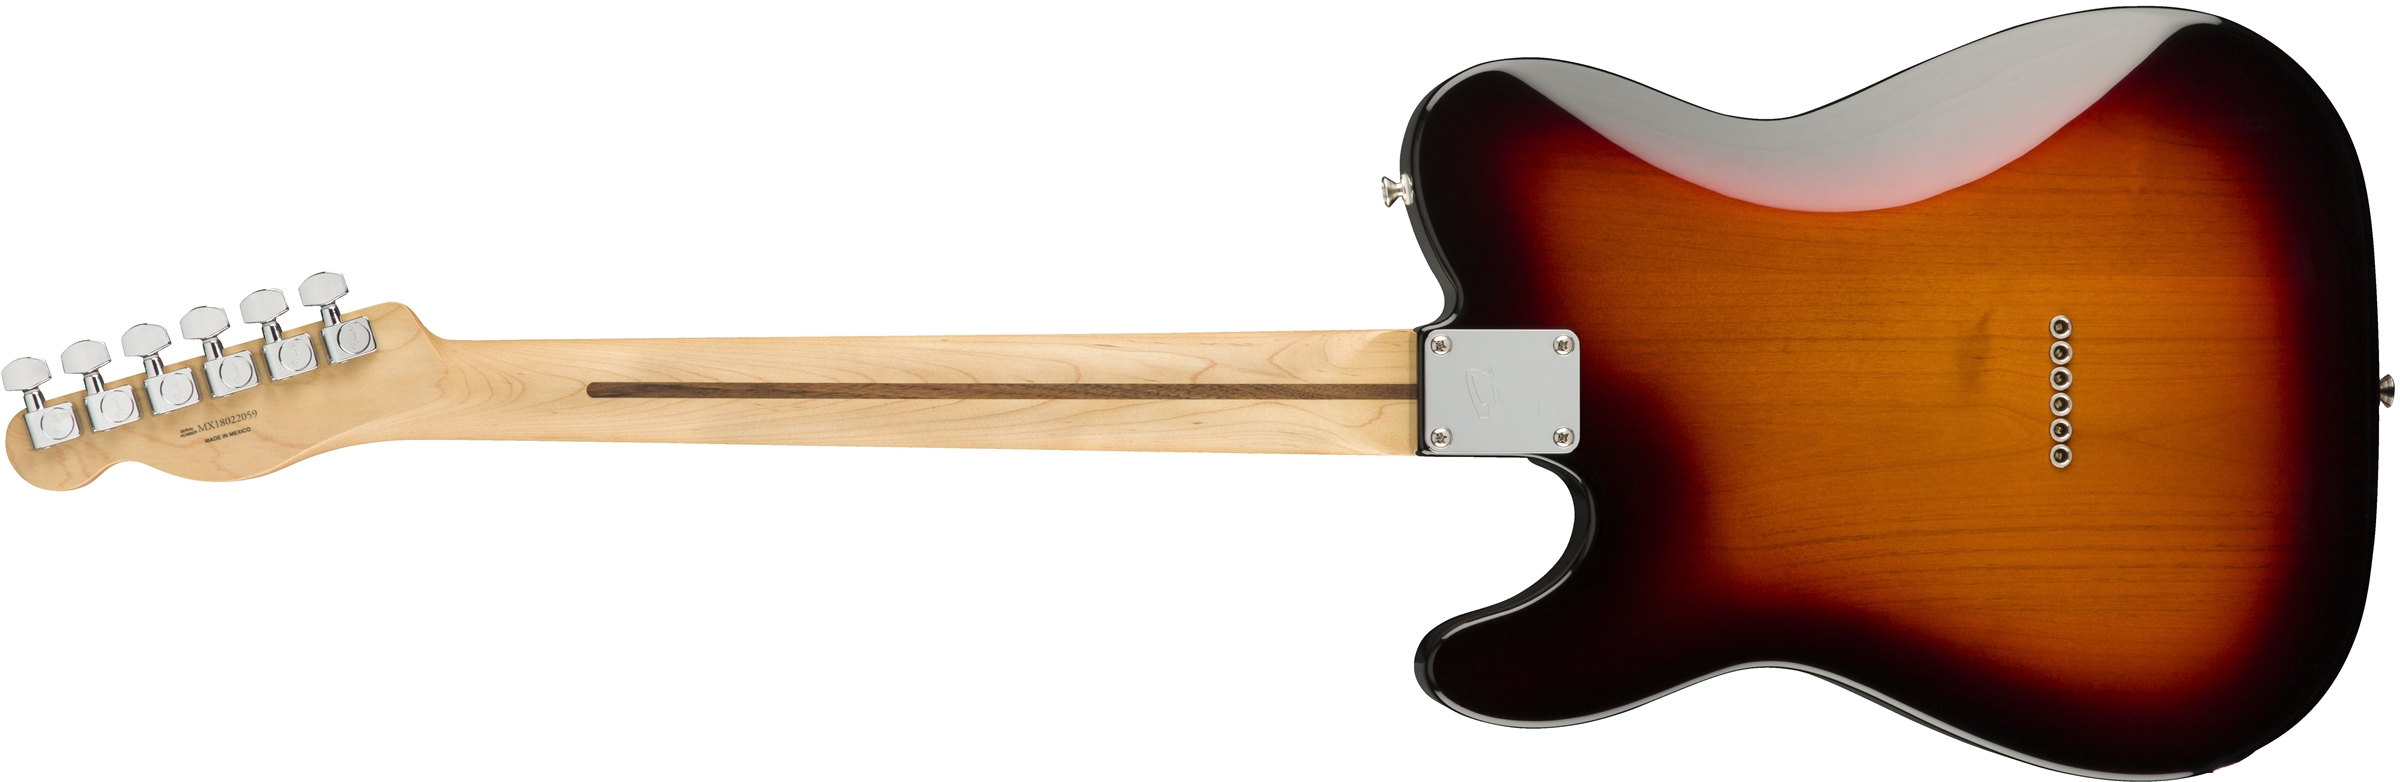 Fender Tele Player Mex Hh Pf - 3-color Sunburst - Guitarra eléctrica con forma de tel - Variation 1